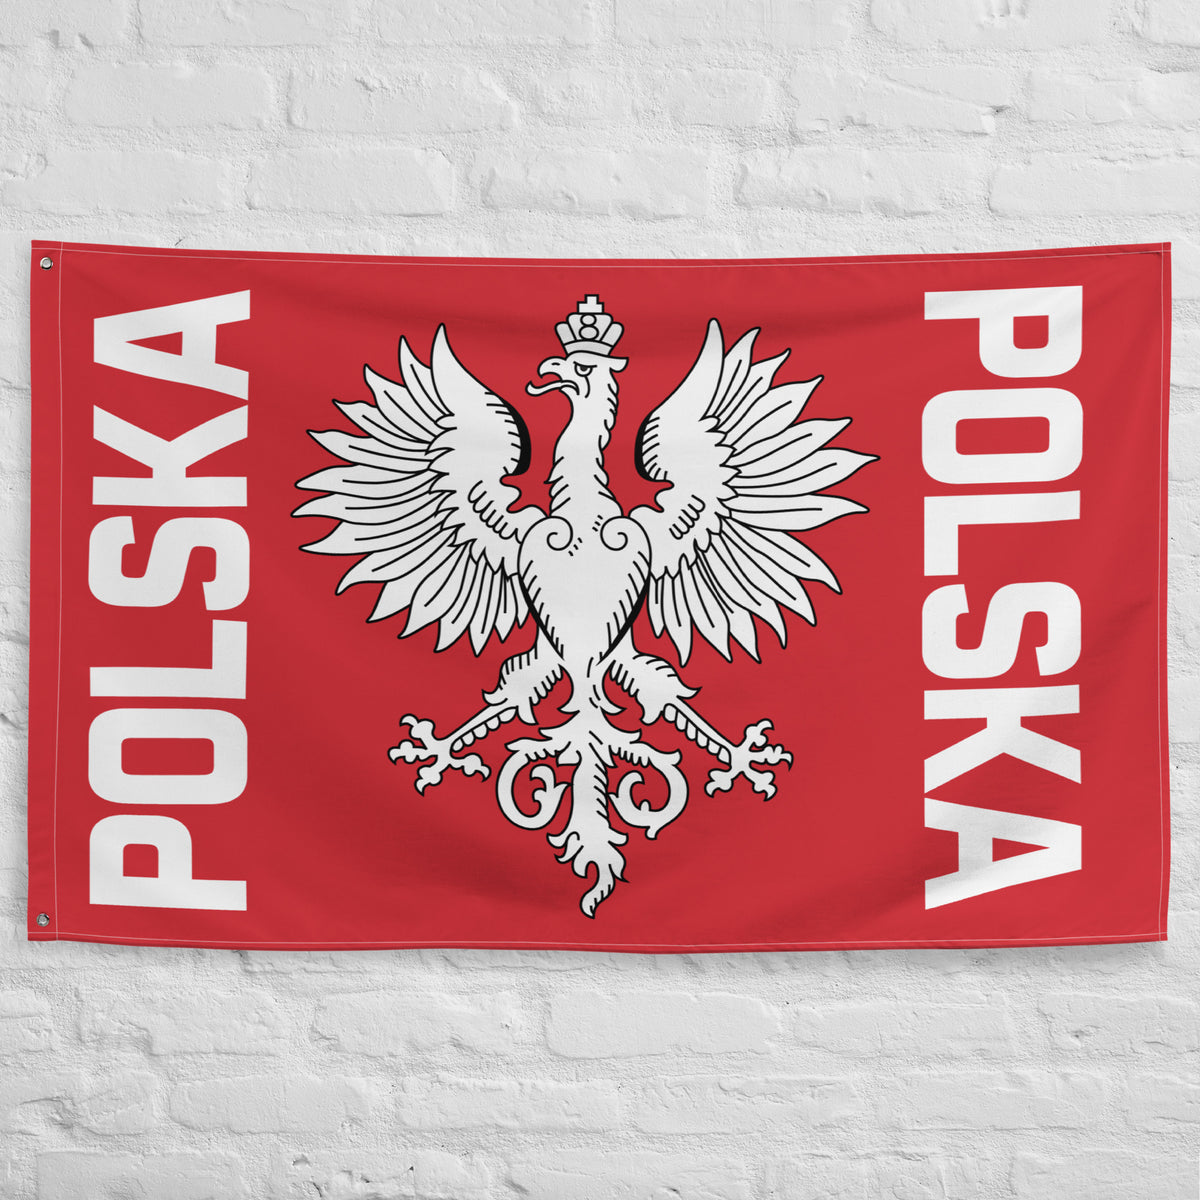 Polska Indoor Wall Flag  Polish Shirt Store Default Title  